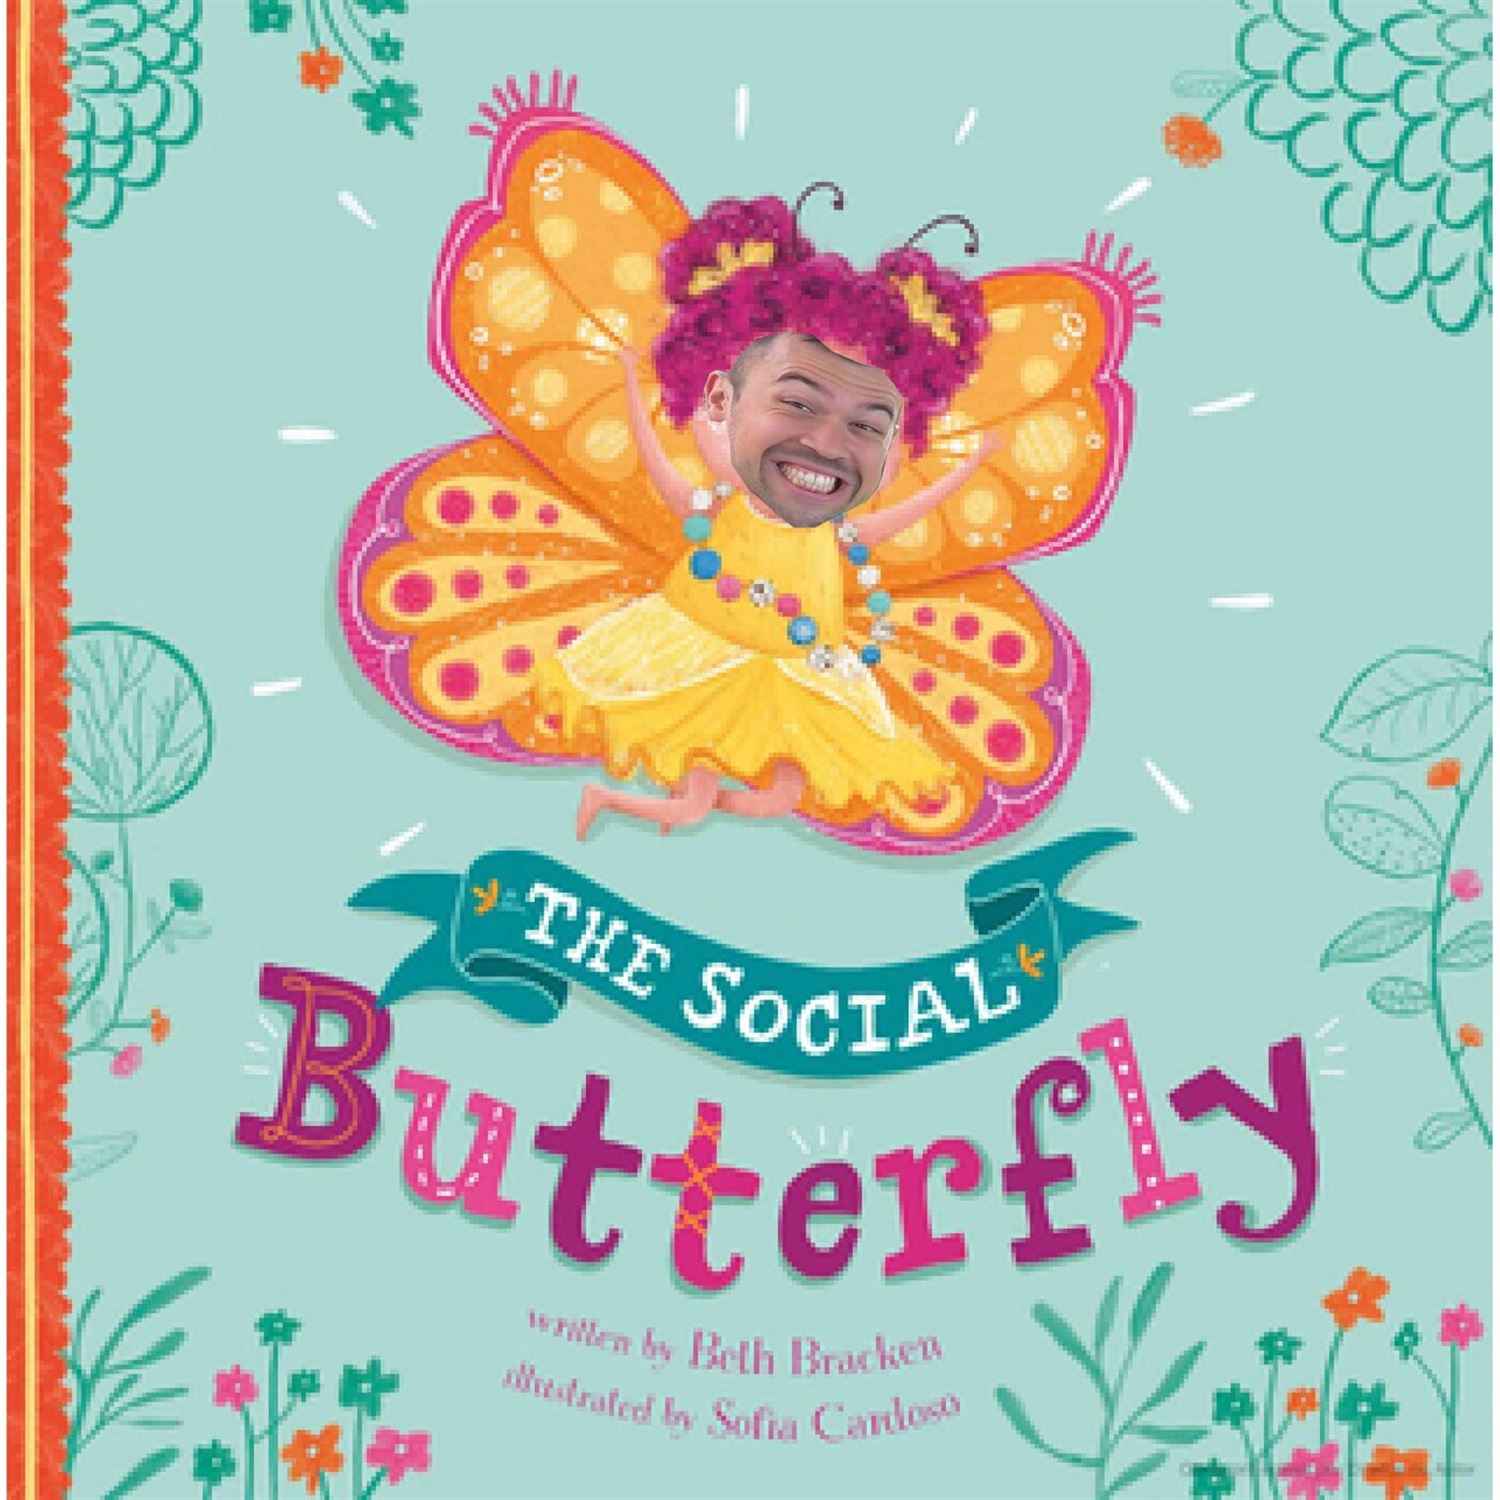 Juan the social butterfly